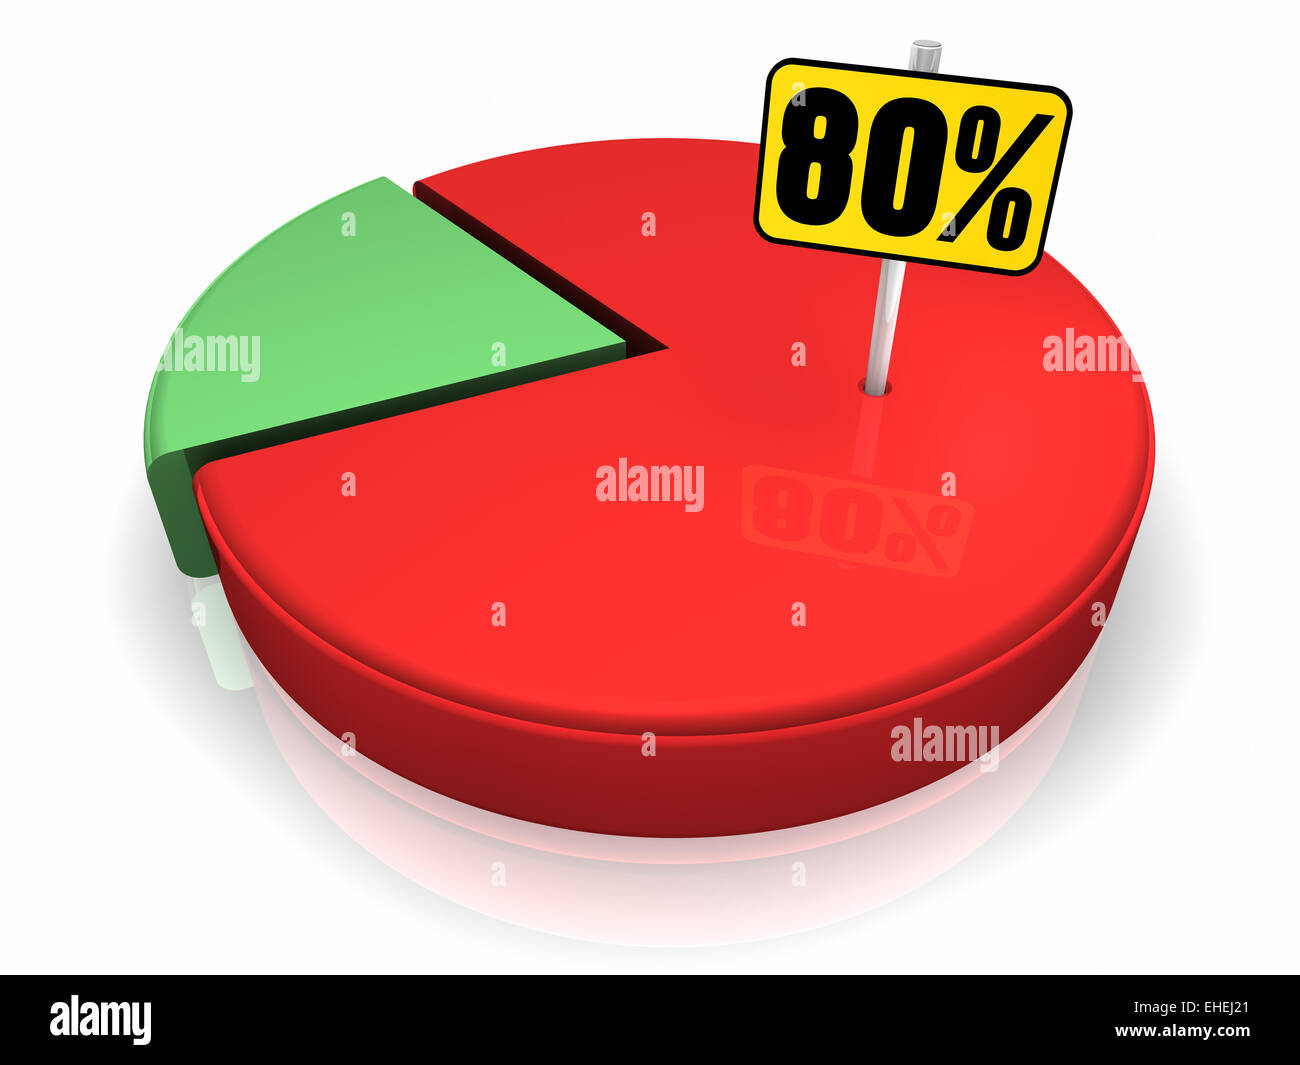 Pie Chart 80 Percent Stock Photo